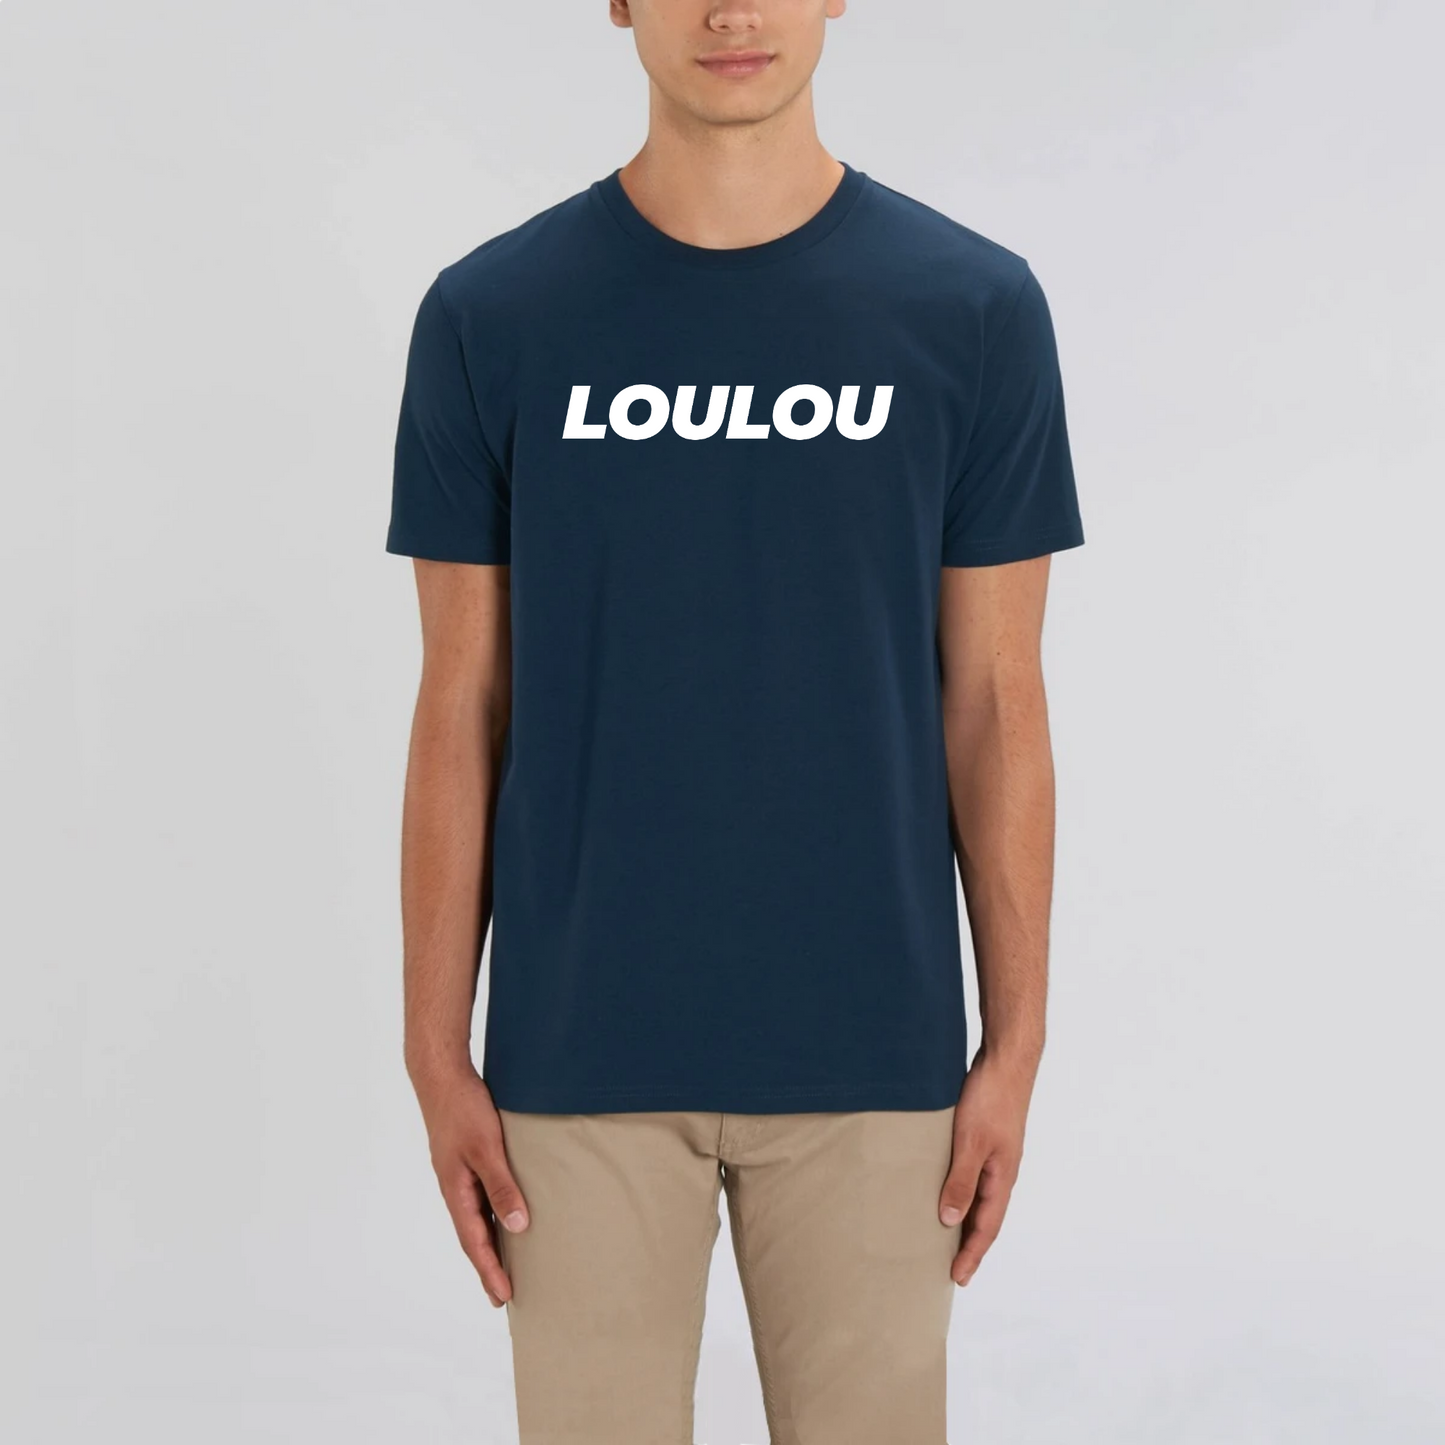 t-shirt loulou, T-French, t-shirt homme, coton bio, t-shirt saint valentin, t-shirt surnom, t-shirt humour, Marine